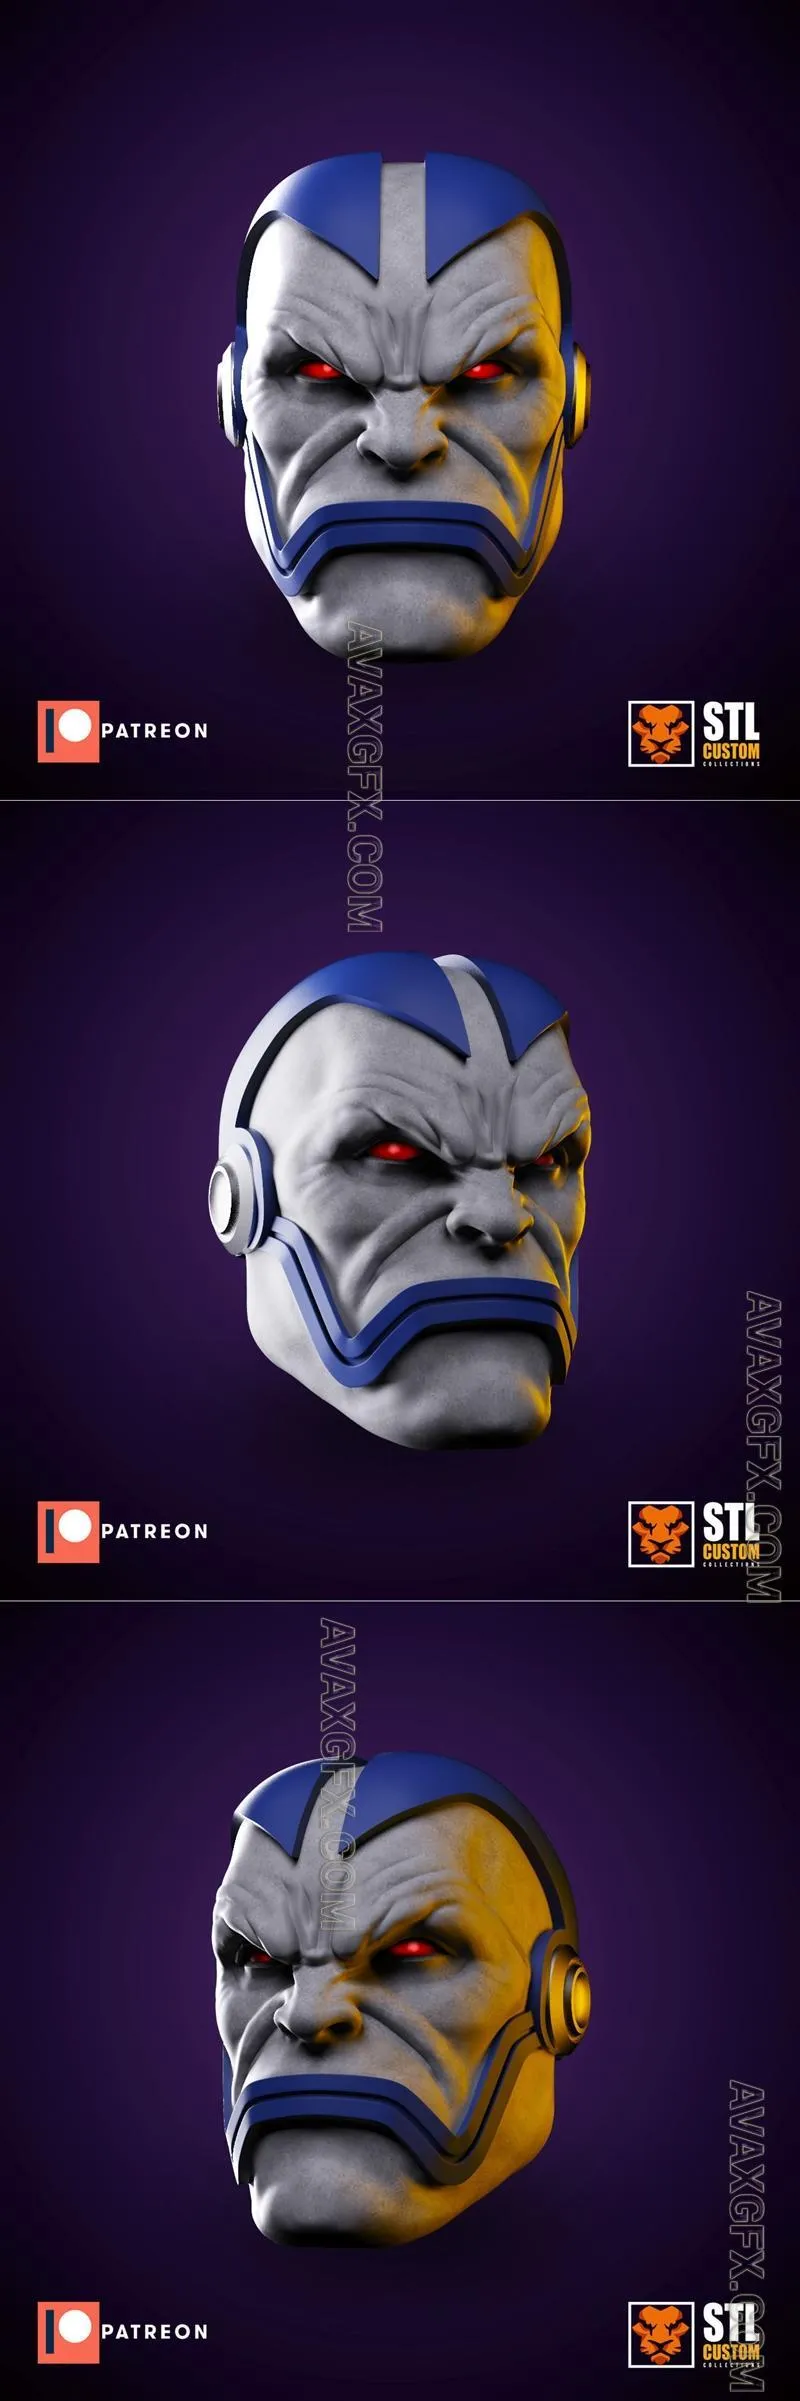 Apocalypse hulk mask from marvel comics - STL 3D Model